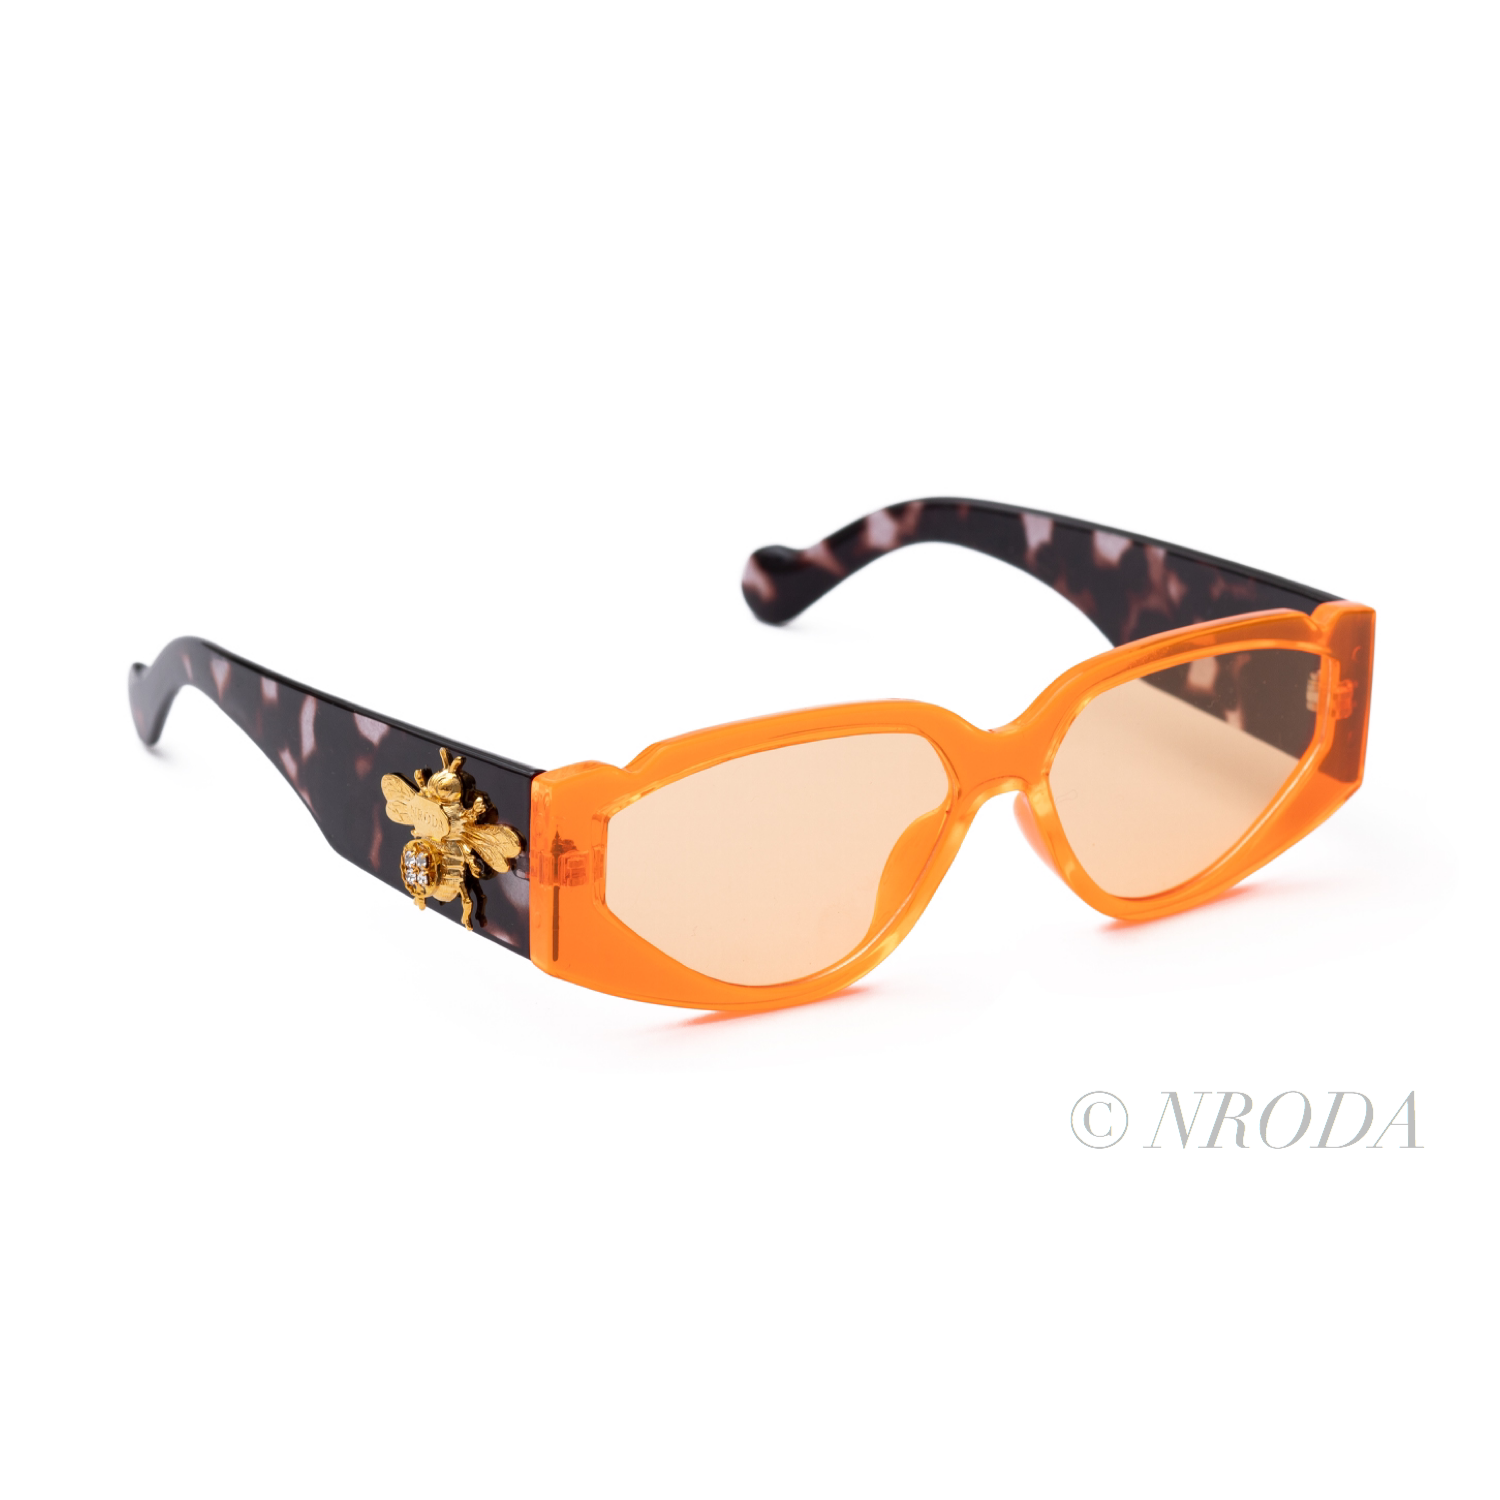 Nroda Gianni Love Bee - Gemstone edition Fire Orange Eyewear Sunglasses Collection, Tnemnroda man- NRODA